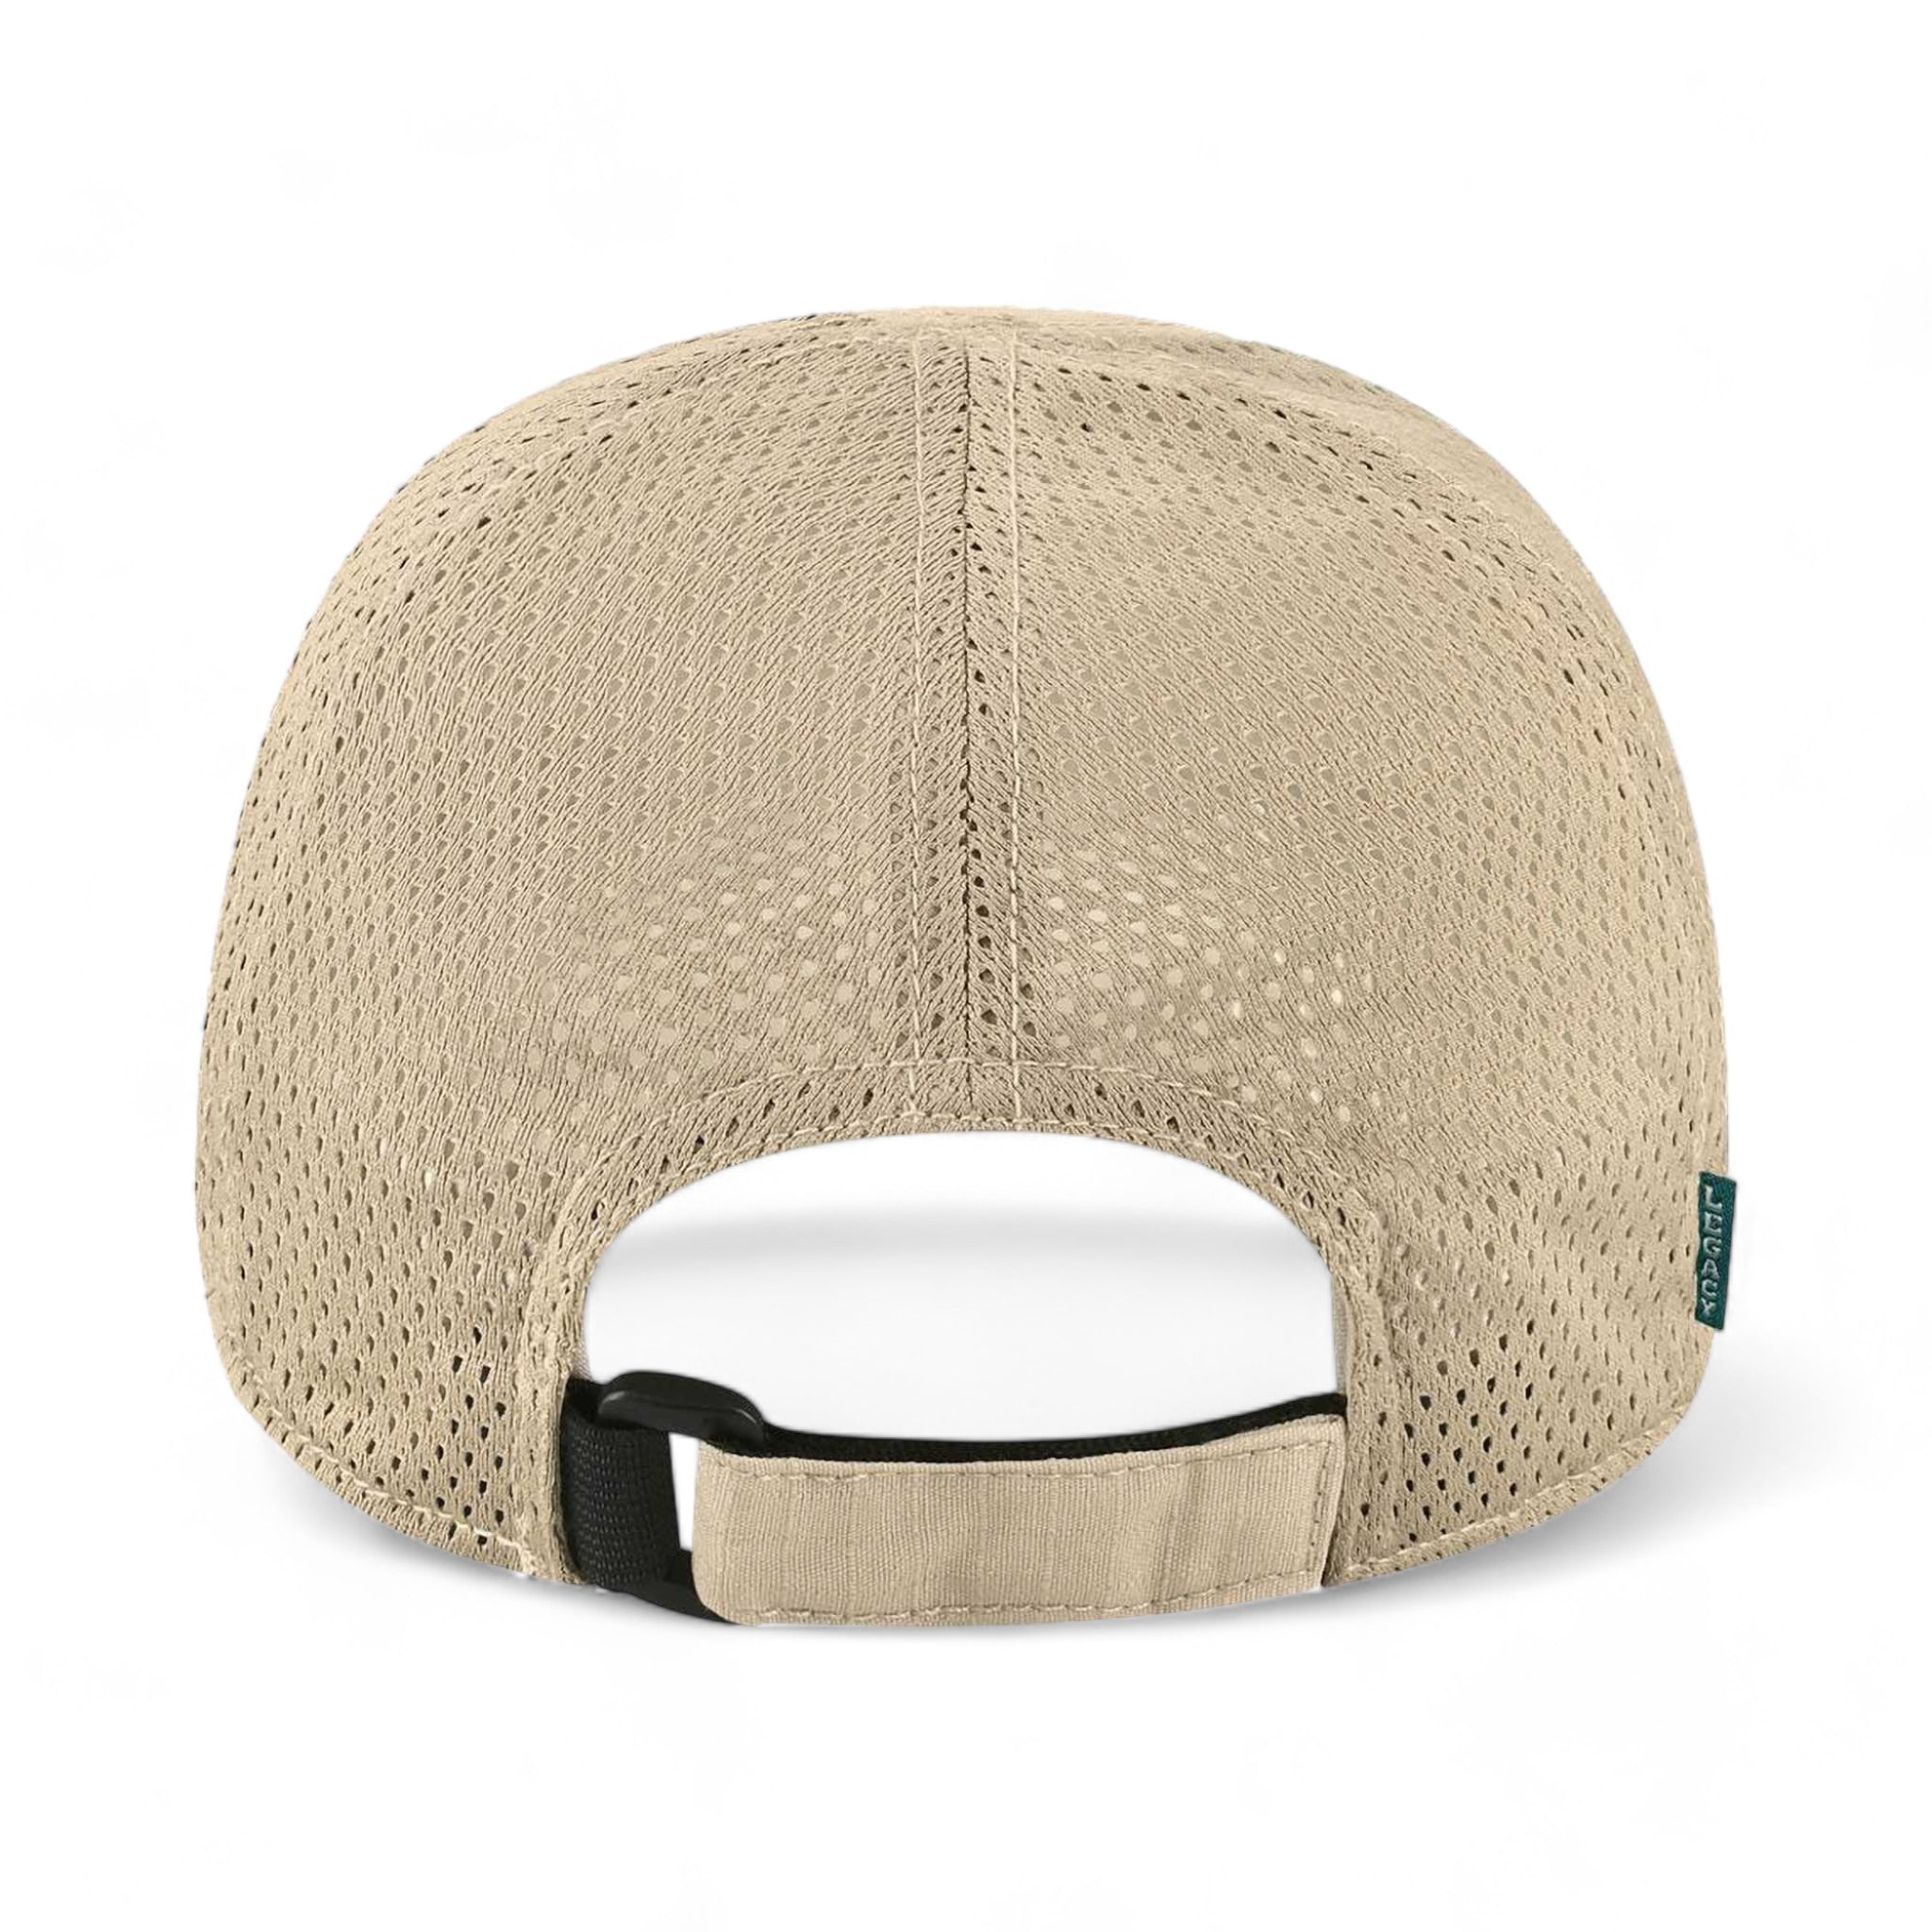 Back view of LEGACY TACT custom hat in khaki and khaki